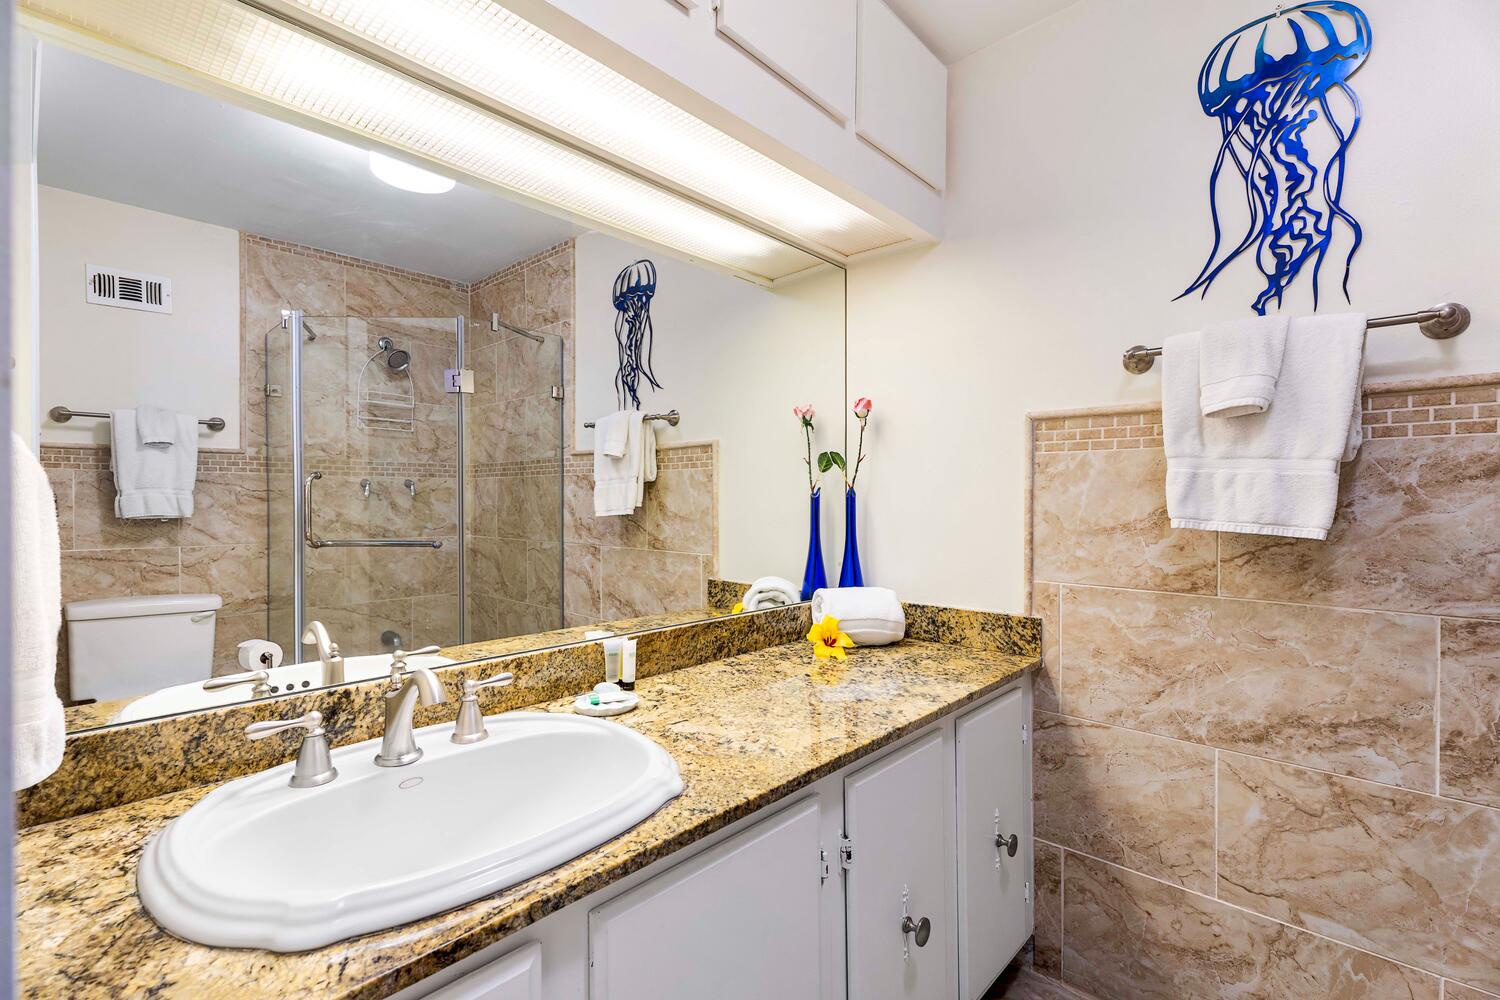 Kailua Kona Vacation Rentals, Kona Alii 512 - Shared bathroom with ample vanity space